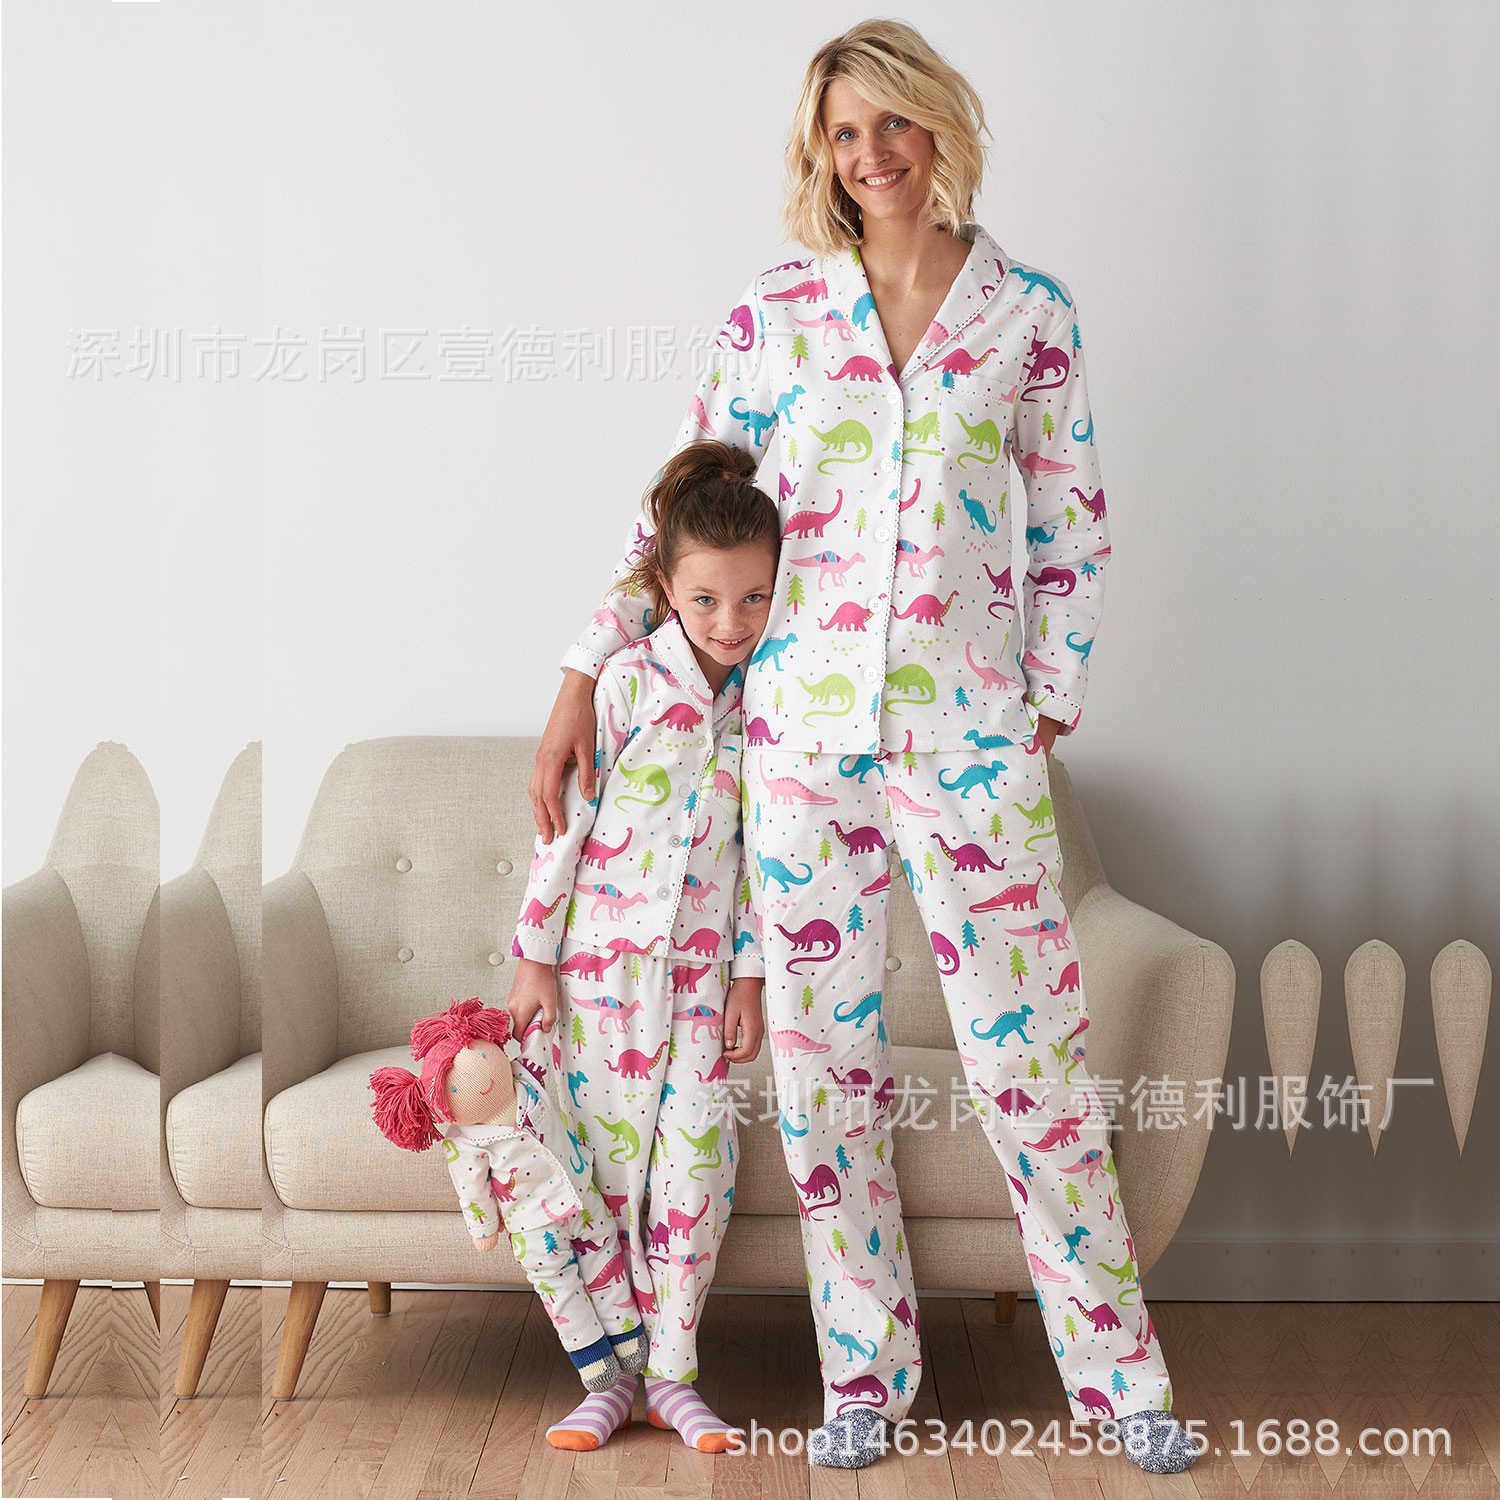 Home Wear Fashion Pajamas Long Sleeve Children's Sleepwear Cartoon Print Nightwear for Kids